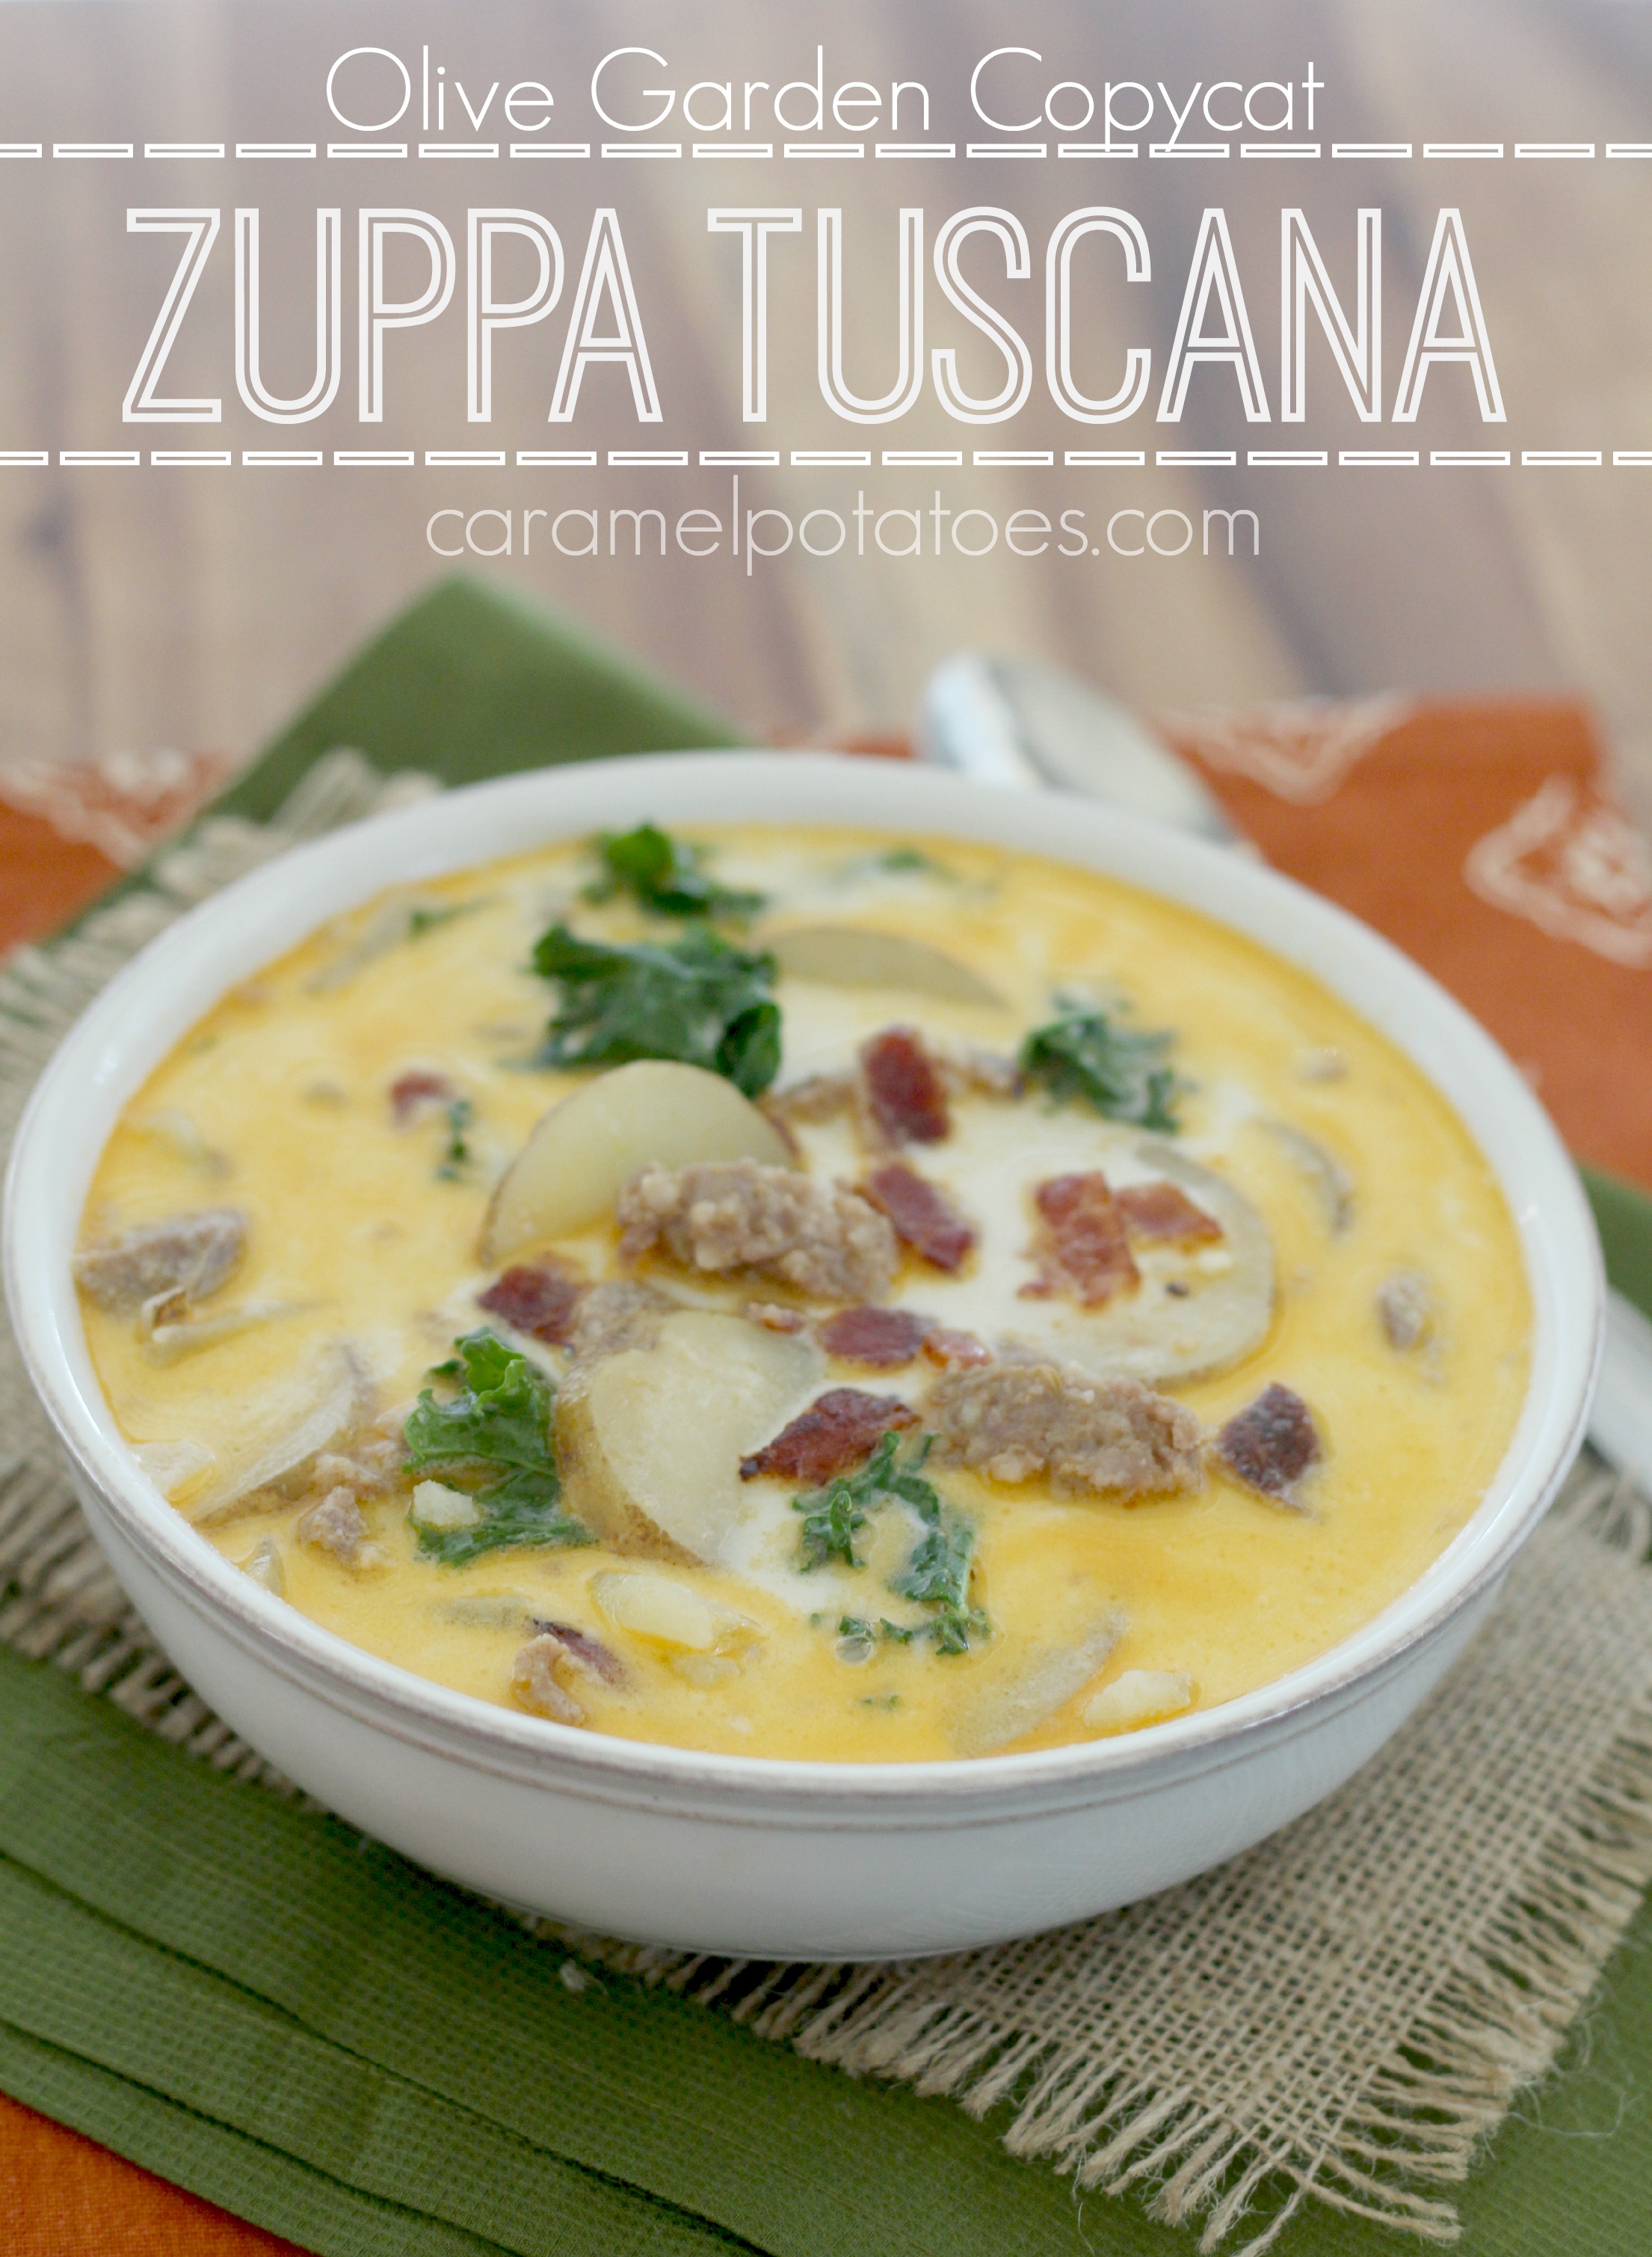 Caramel Potatoes » Zuppa Toscana (Olive Garden Copycat)